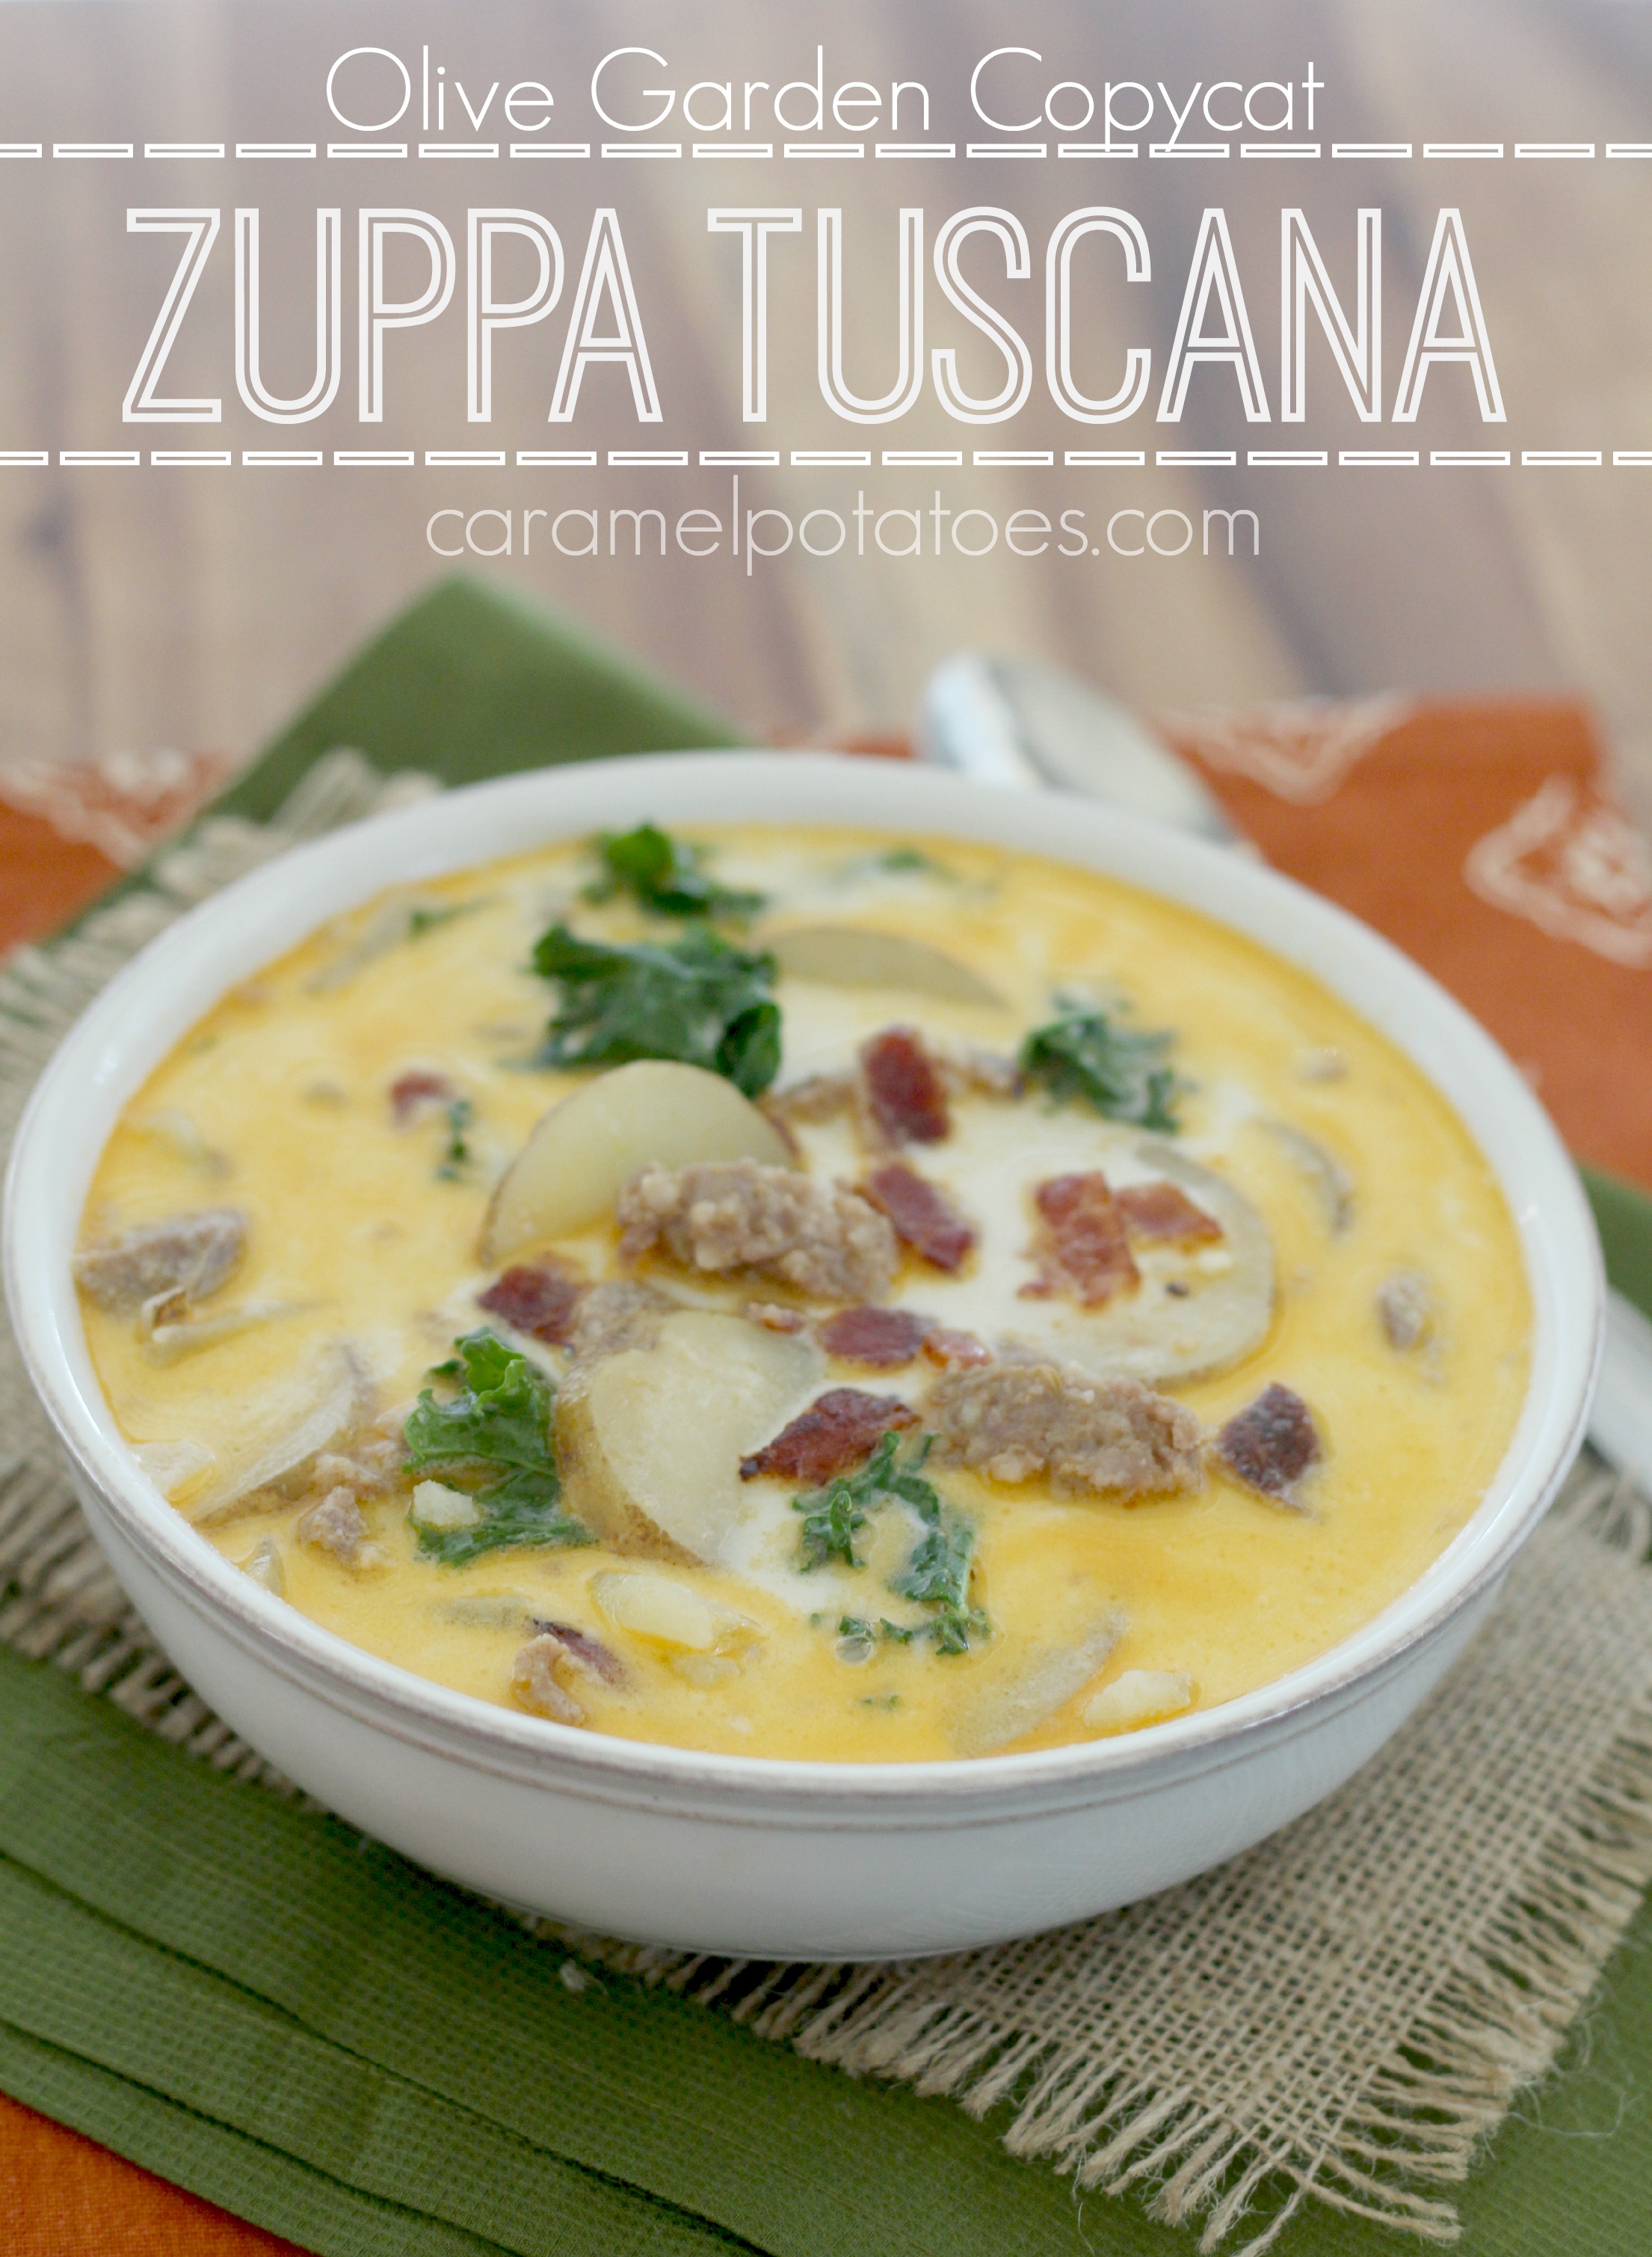 Caramel Potatoes » Zuppa Toscana (Olive Garden Copycat)